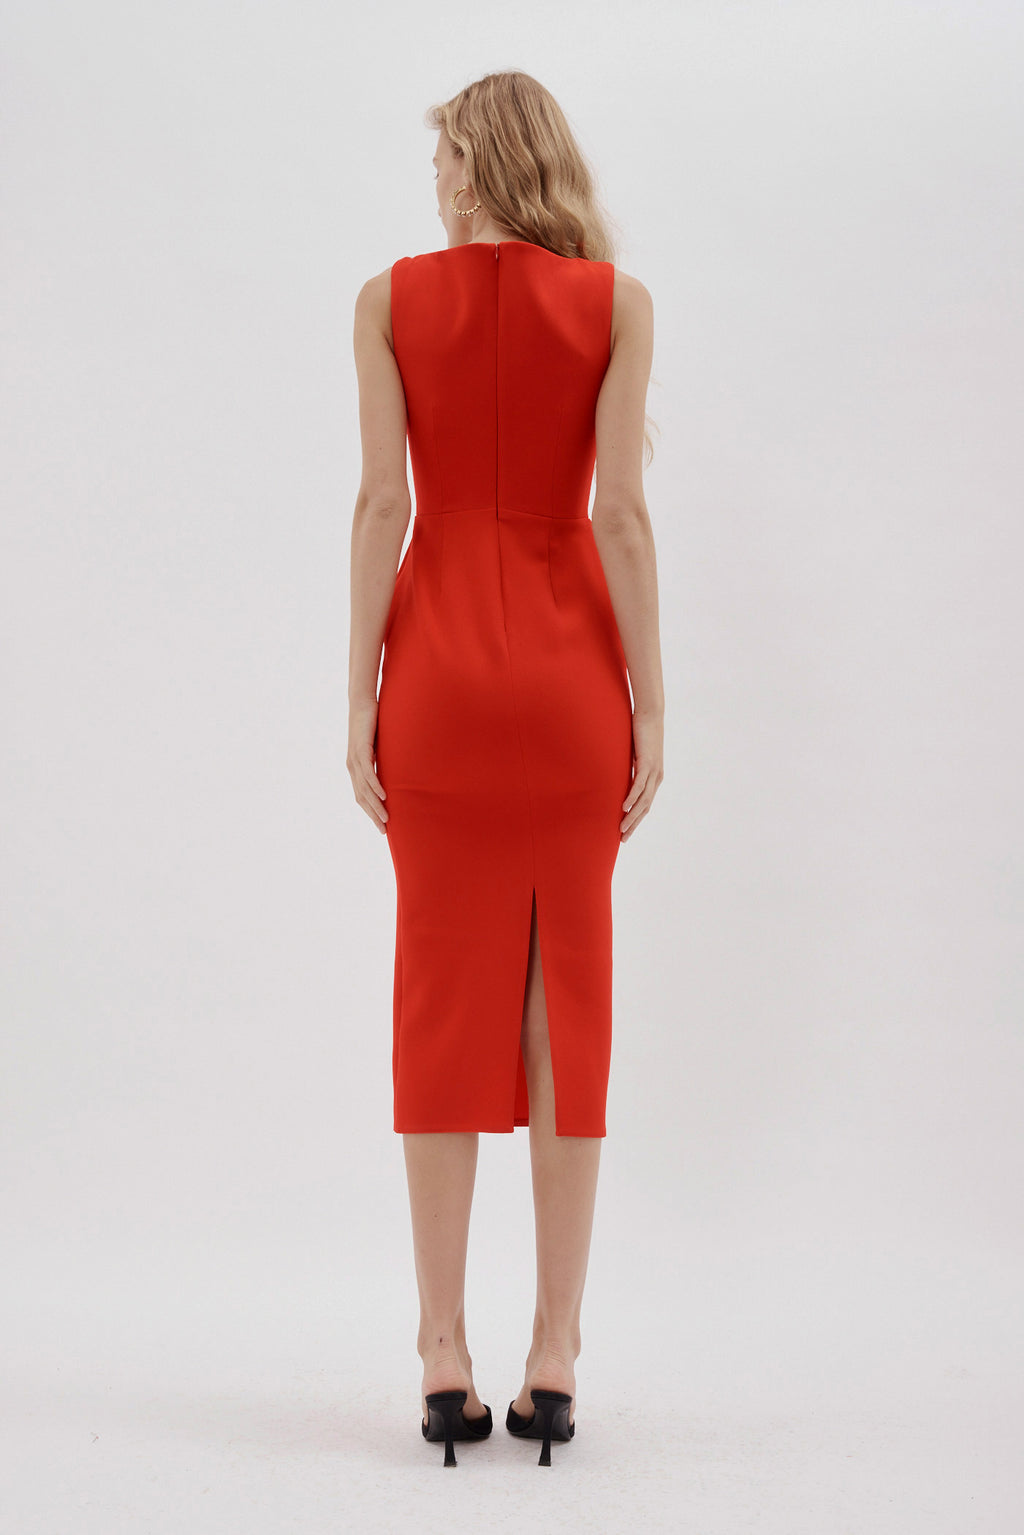 Claron Red Dress